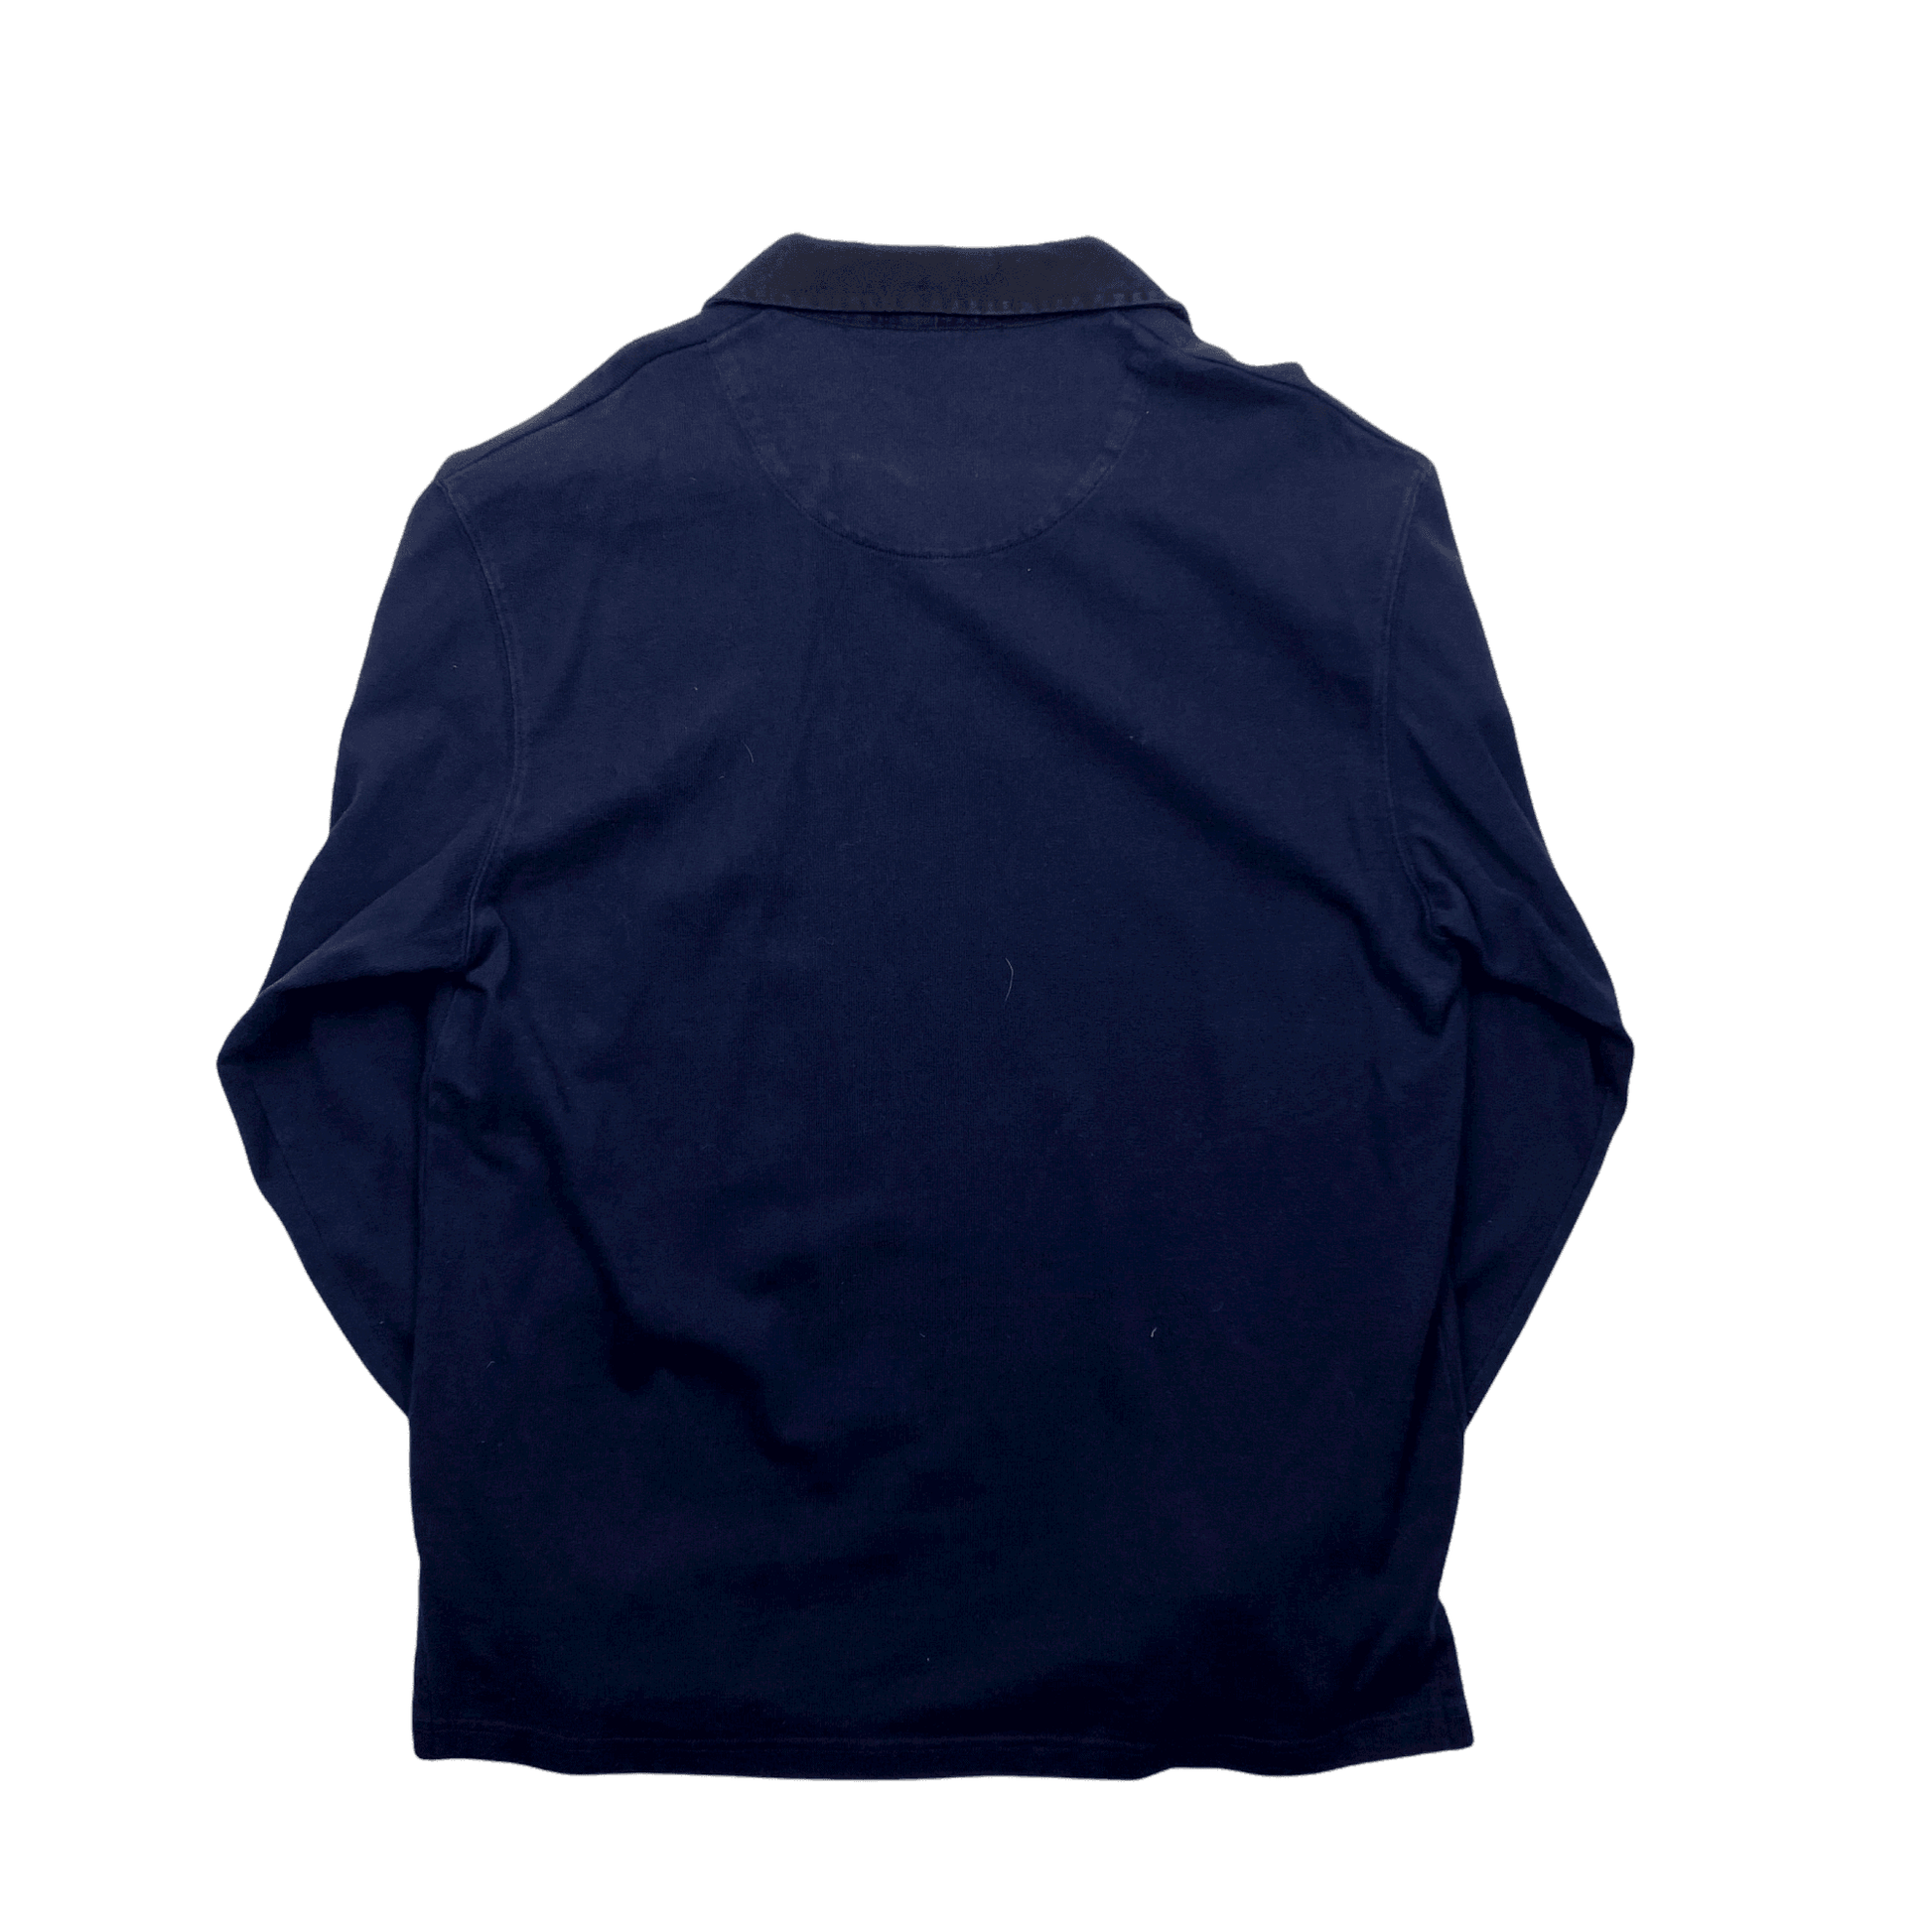 Vintage 90s Navy Blue Ralph Lauren Polo US-67 Long Sleeve Polo Shirt - Medium - The Streetwear Studio